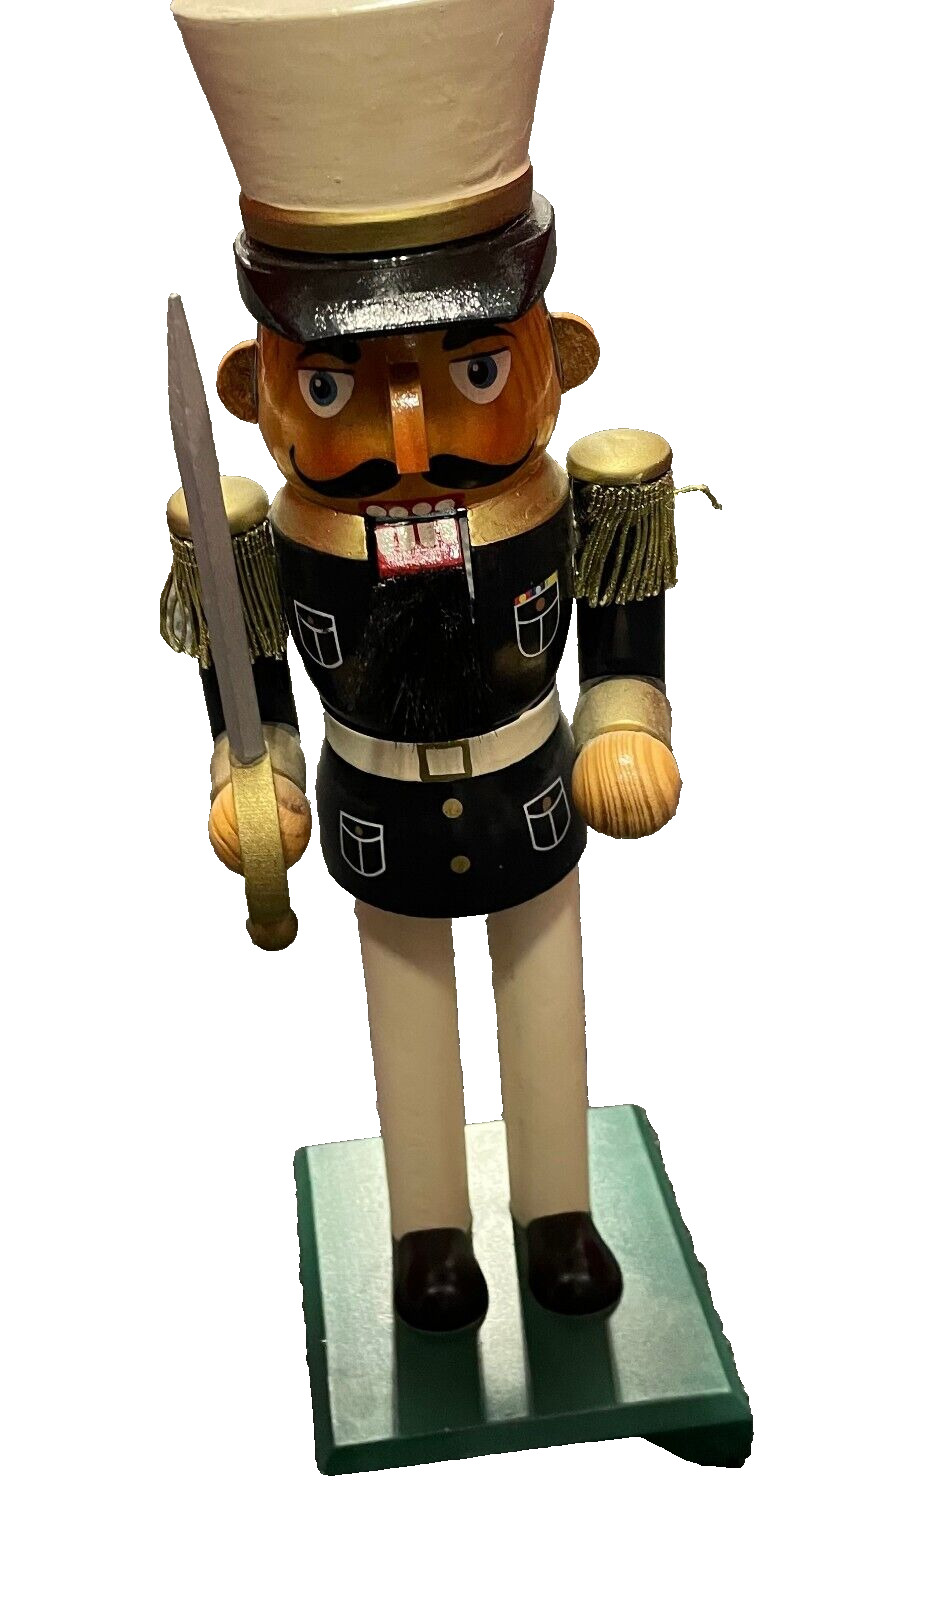 Nutcracker soldier sergeant arms statue carrying swords